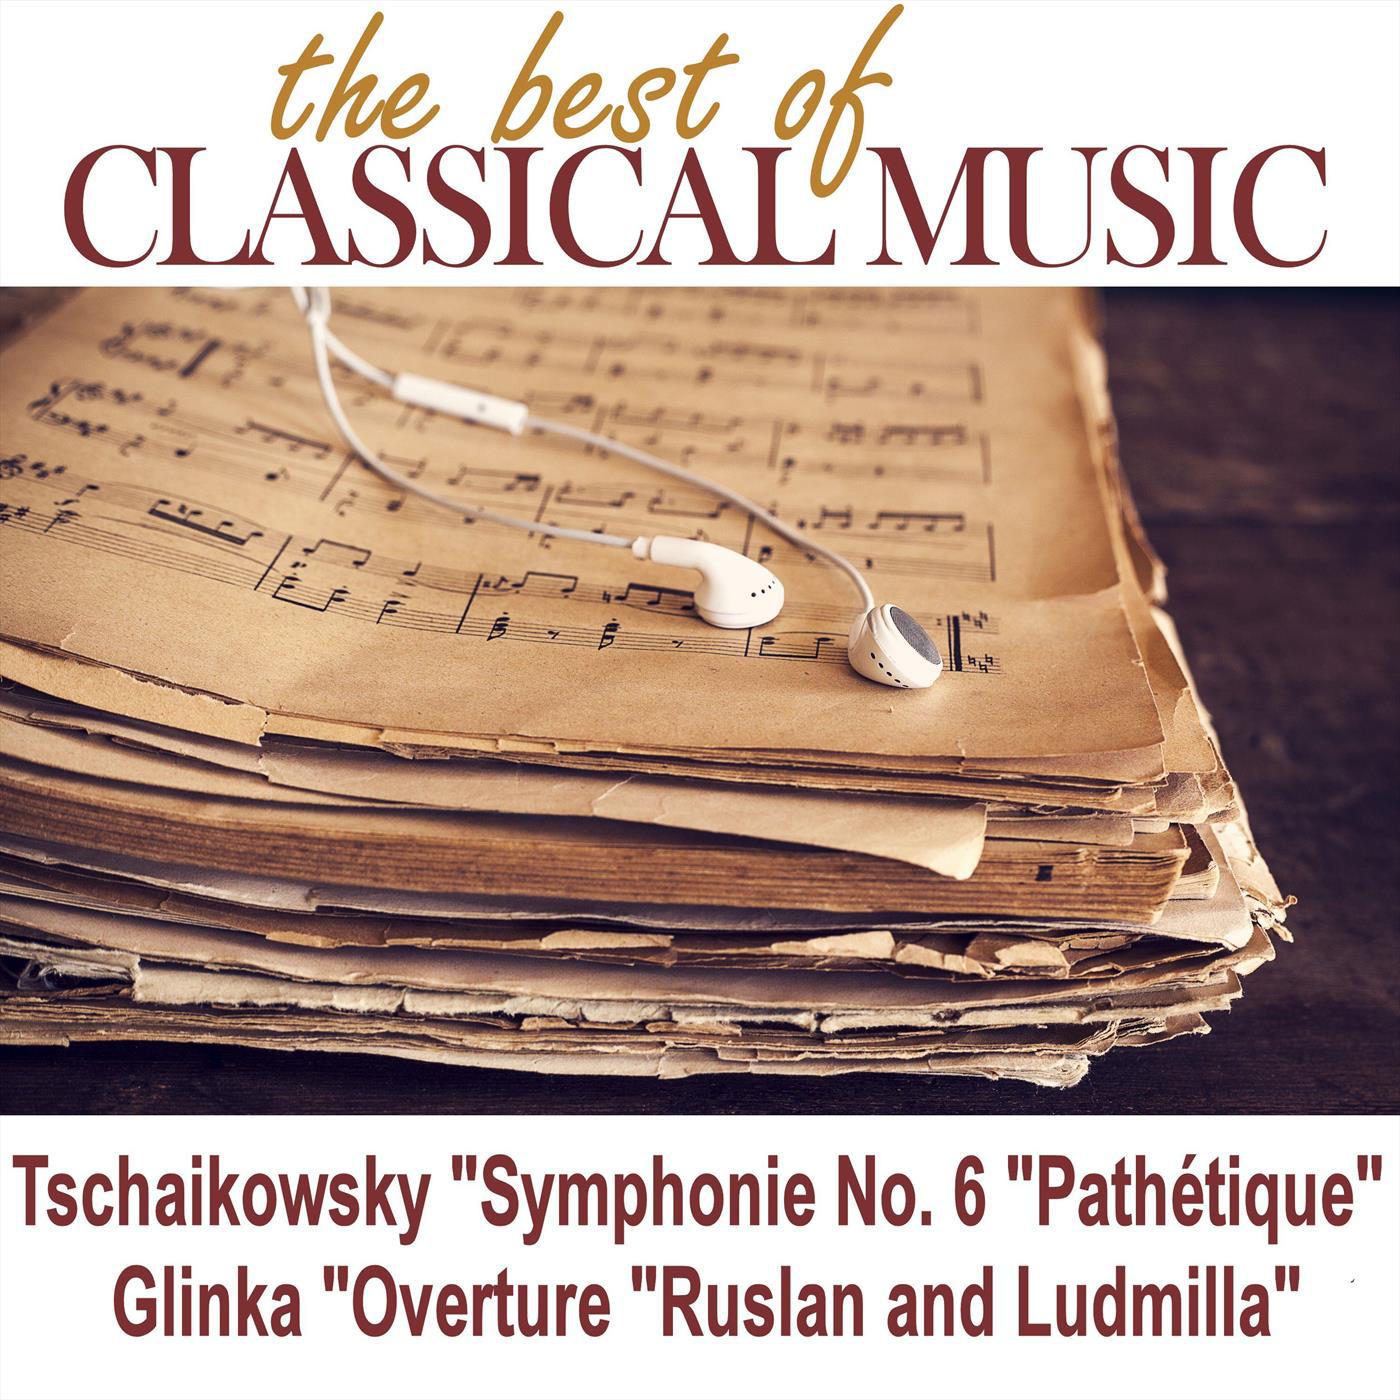 Symphony no.6 in b - minor, op.74 "Pathetique" - Adagio - Allegro non troppo (Tchaikovsky)